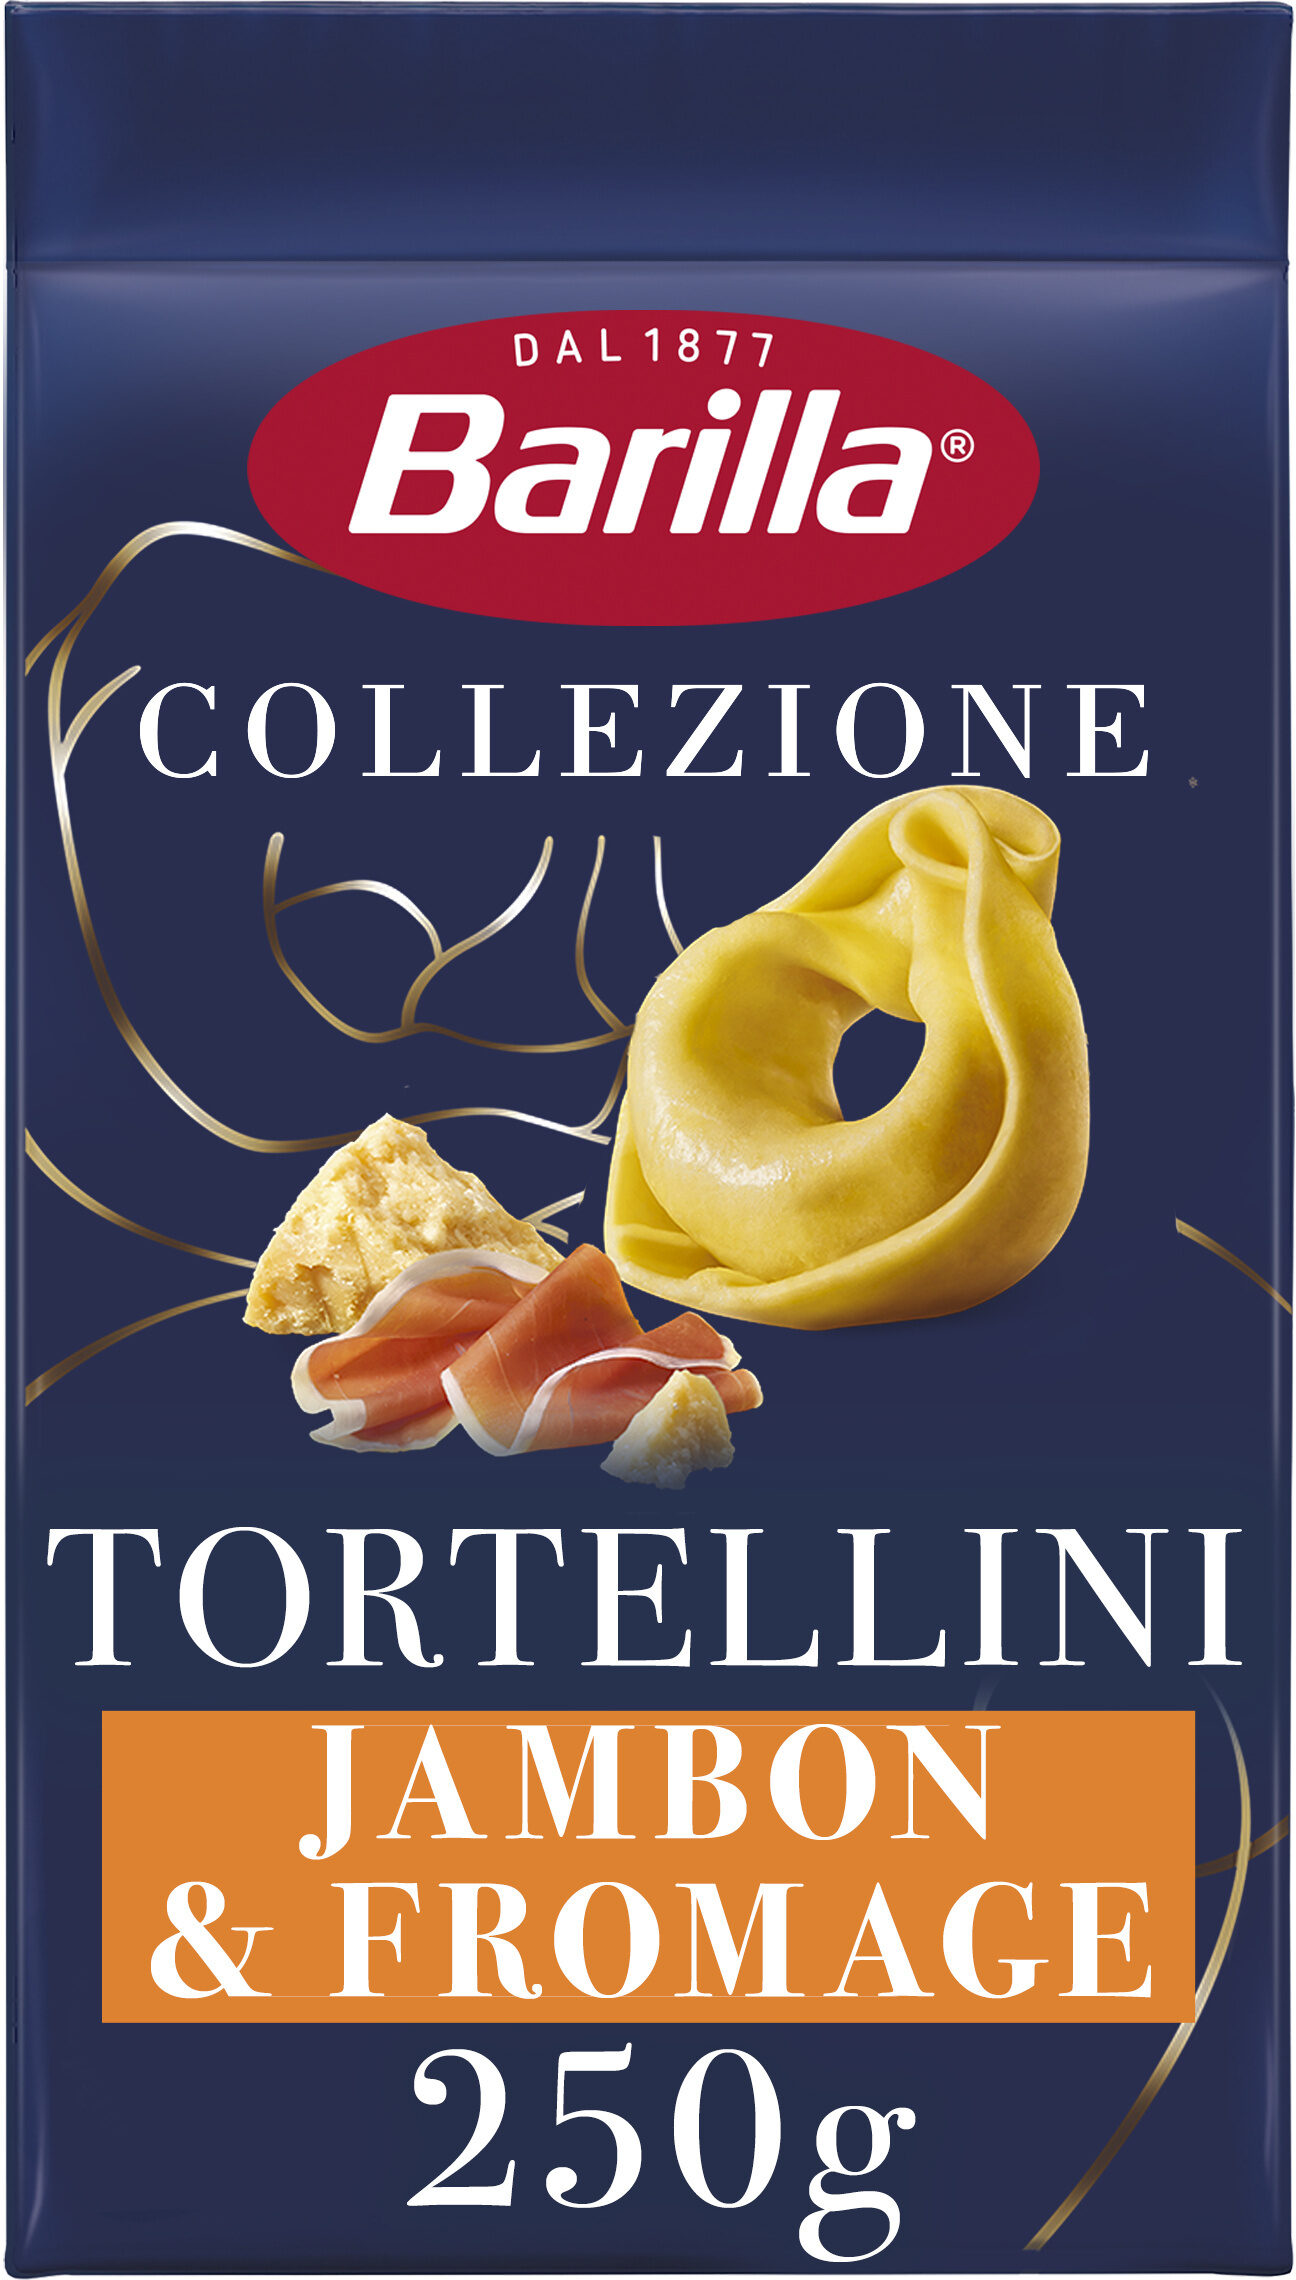 Pâtes tortellini jambon fromage collezione 250g - Produkt - fr